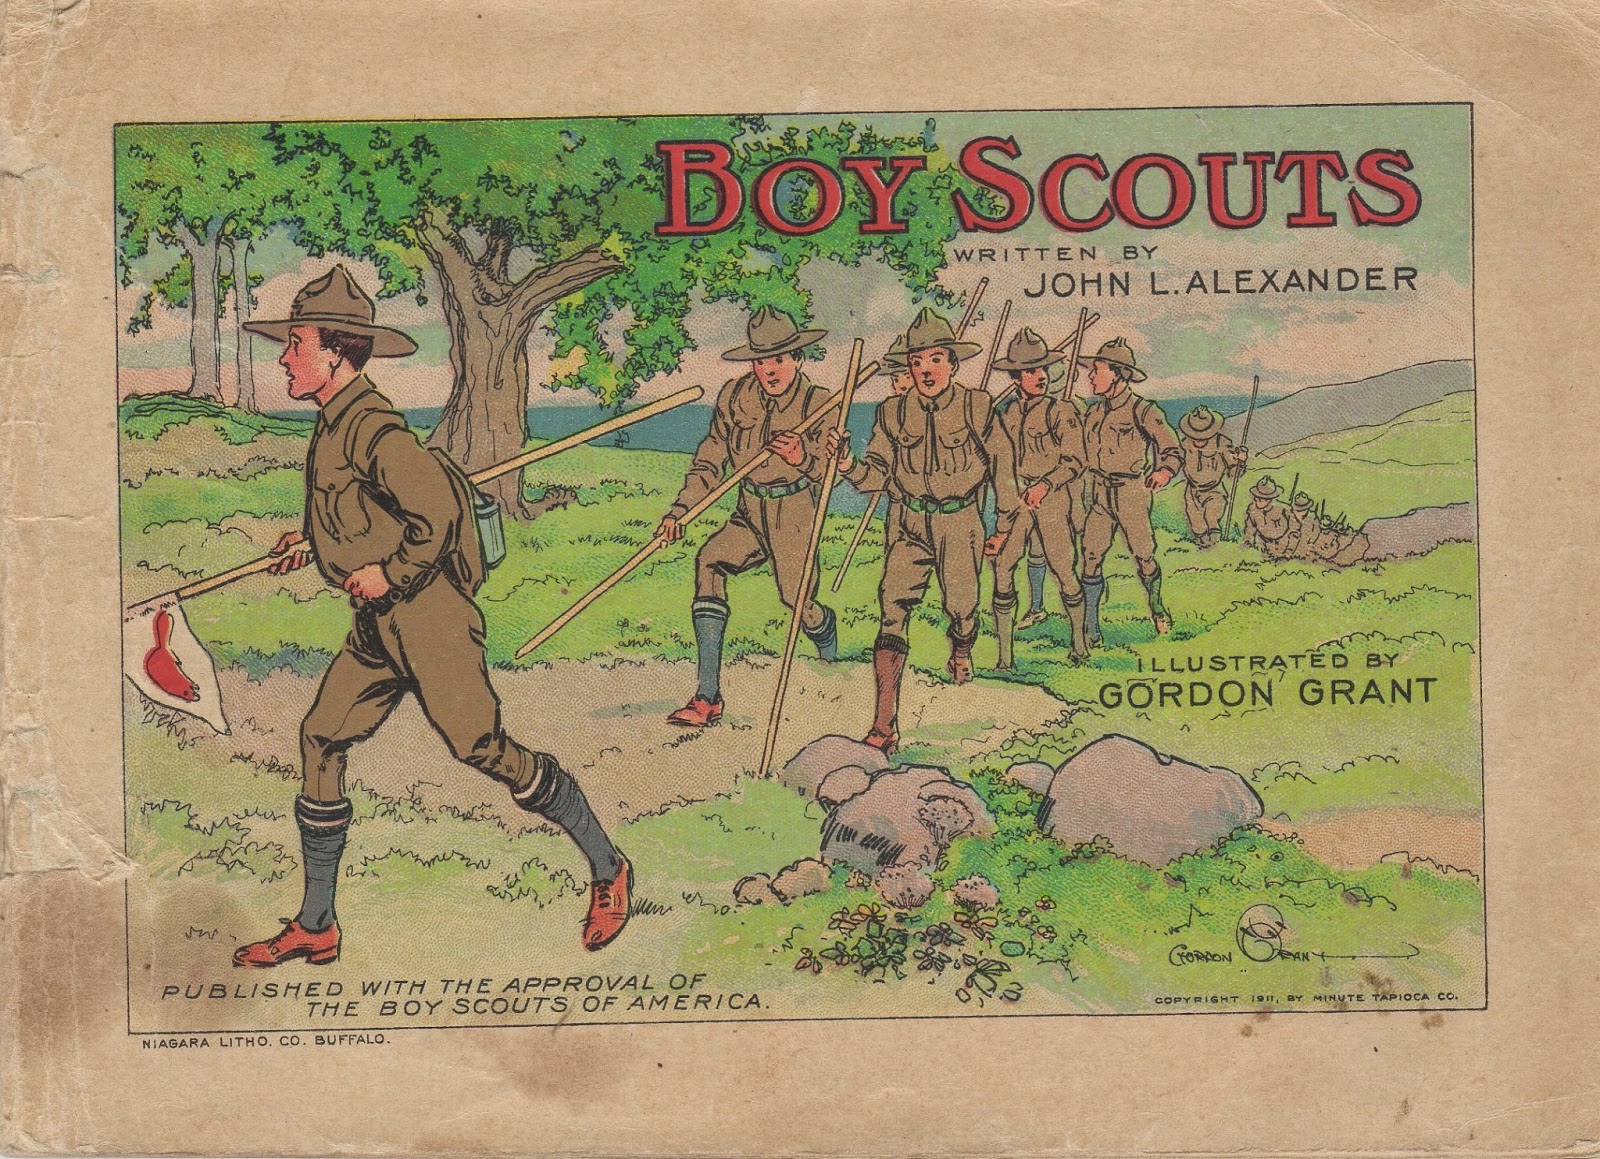 Boy Scout Handbook 1911